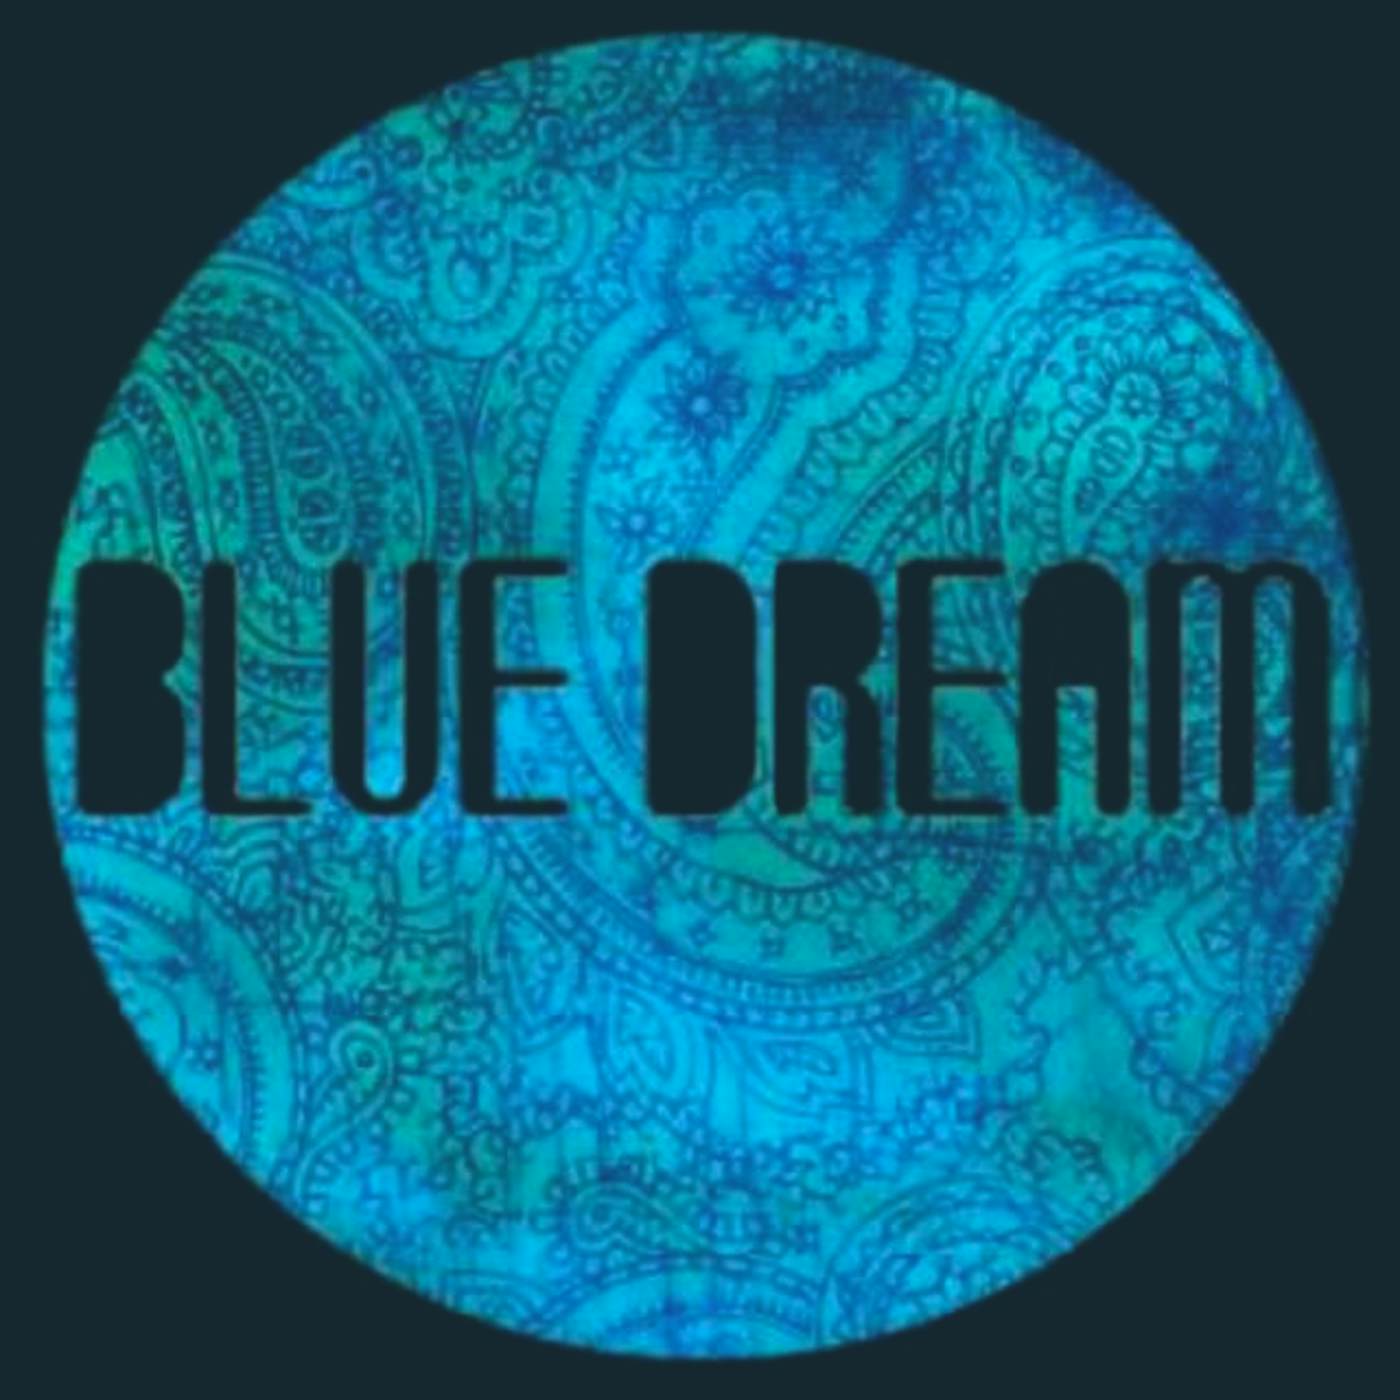 Blue Dream